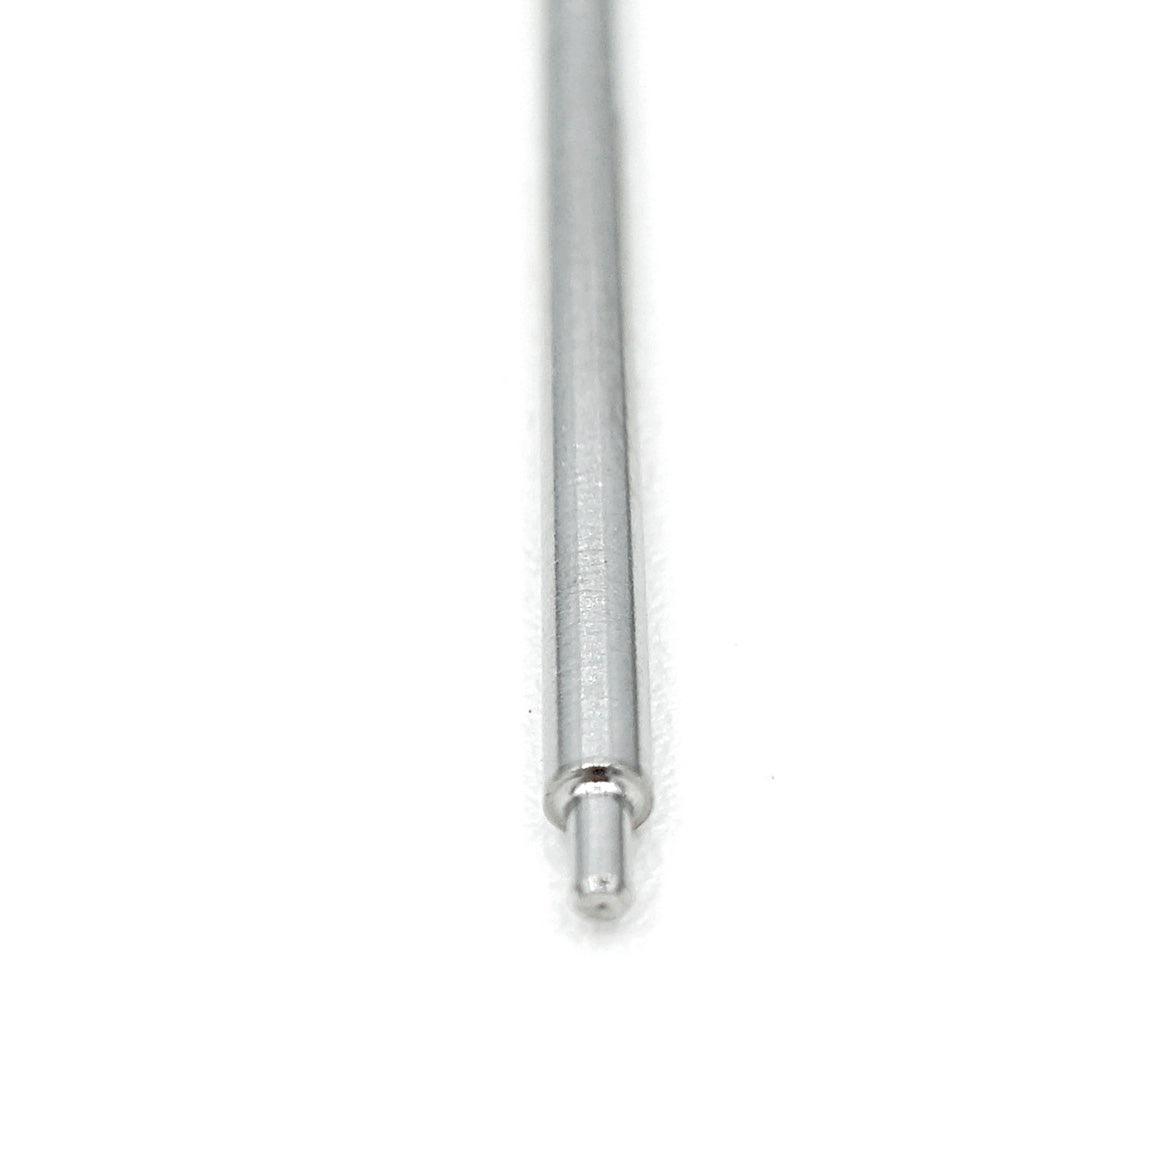 Stiletto Piercing Needles - 14G - Piercing Needles - FYT Tattoo Supplies New York